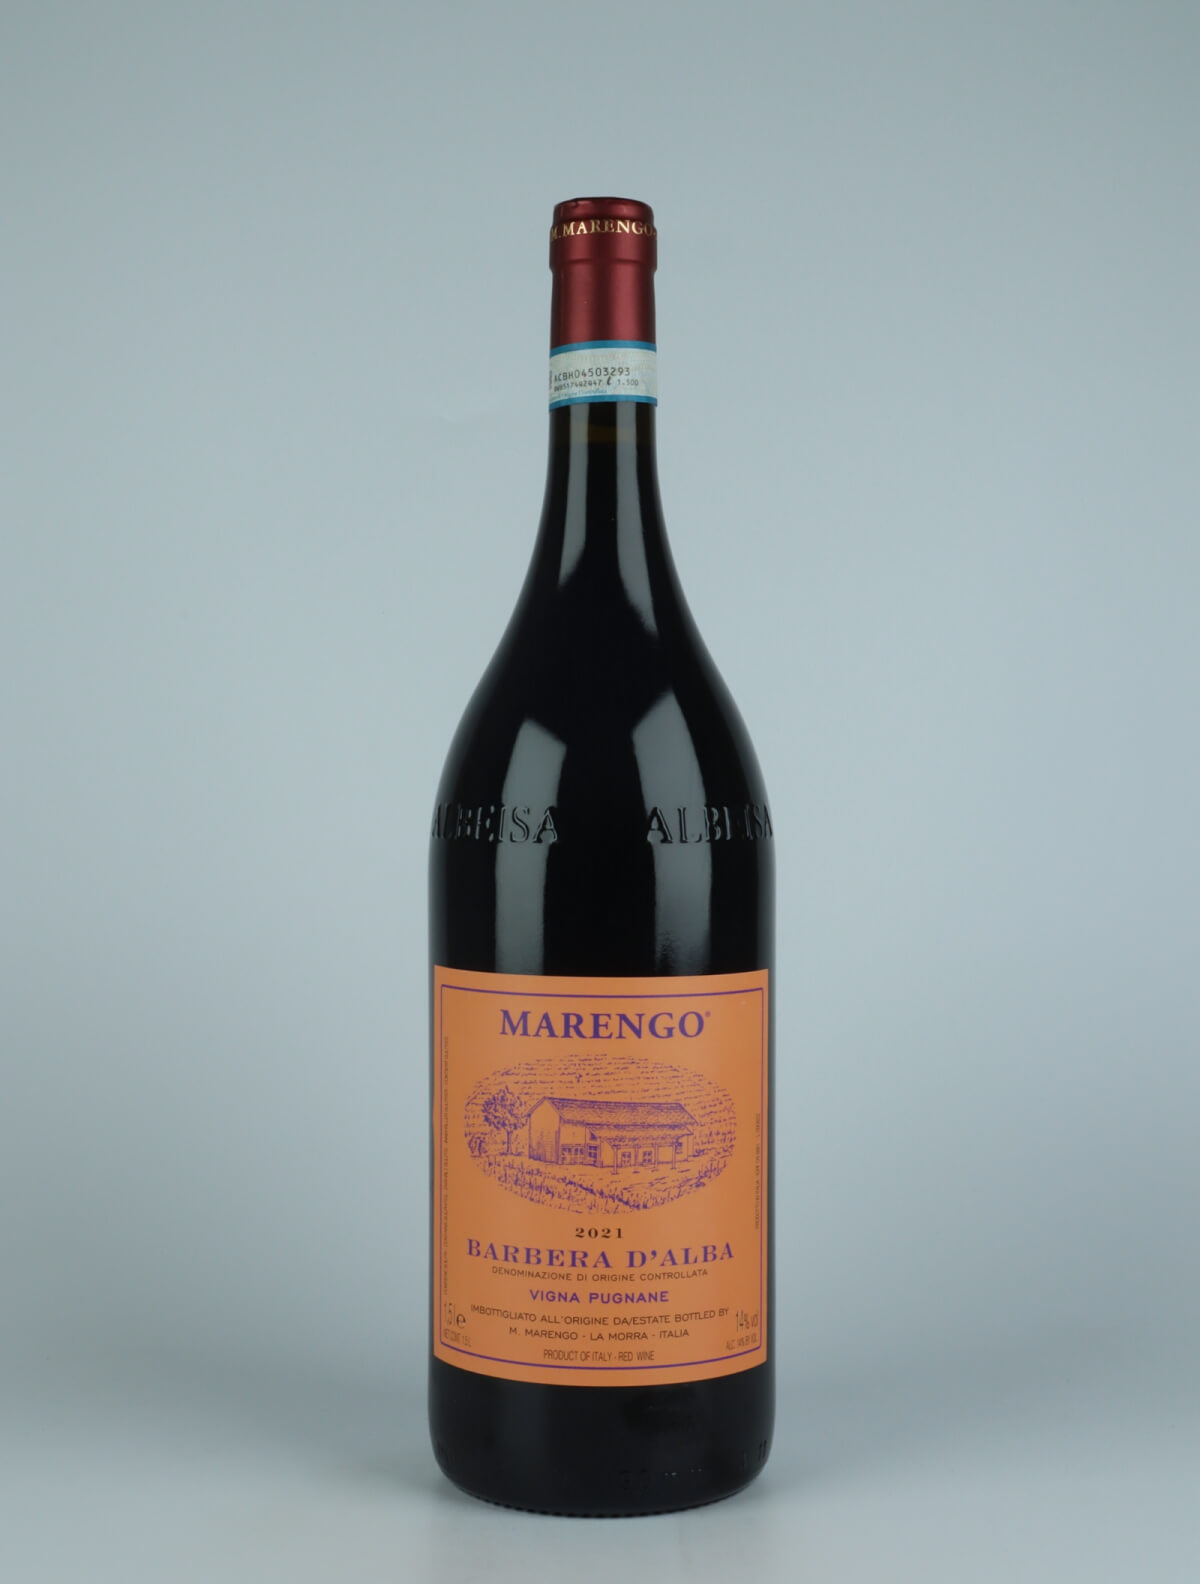 A bottle 2021 Barbera d'Alba - Pugnane Red wine from Mario Marengo, Piedmont in Italy